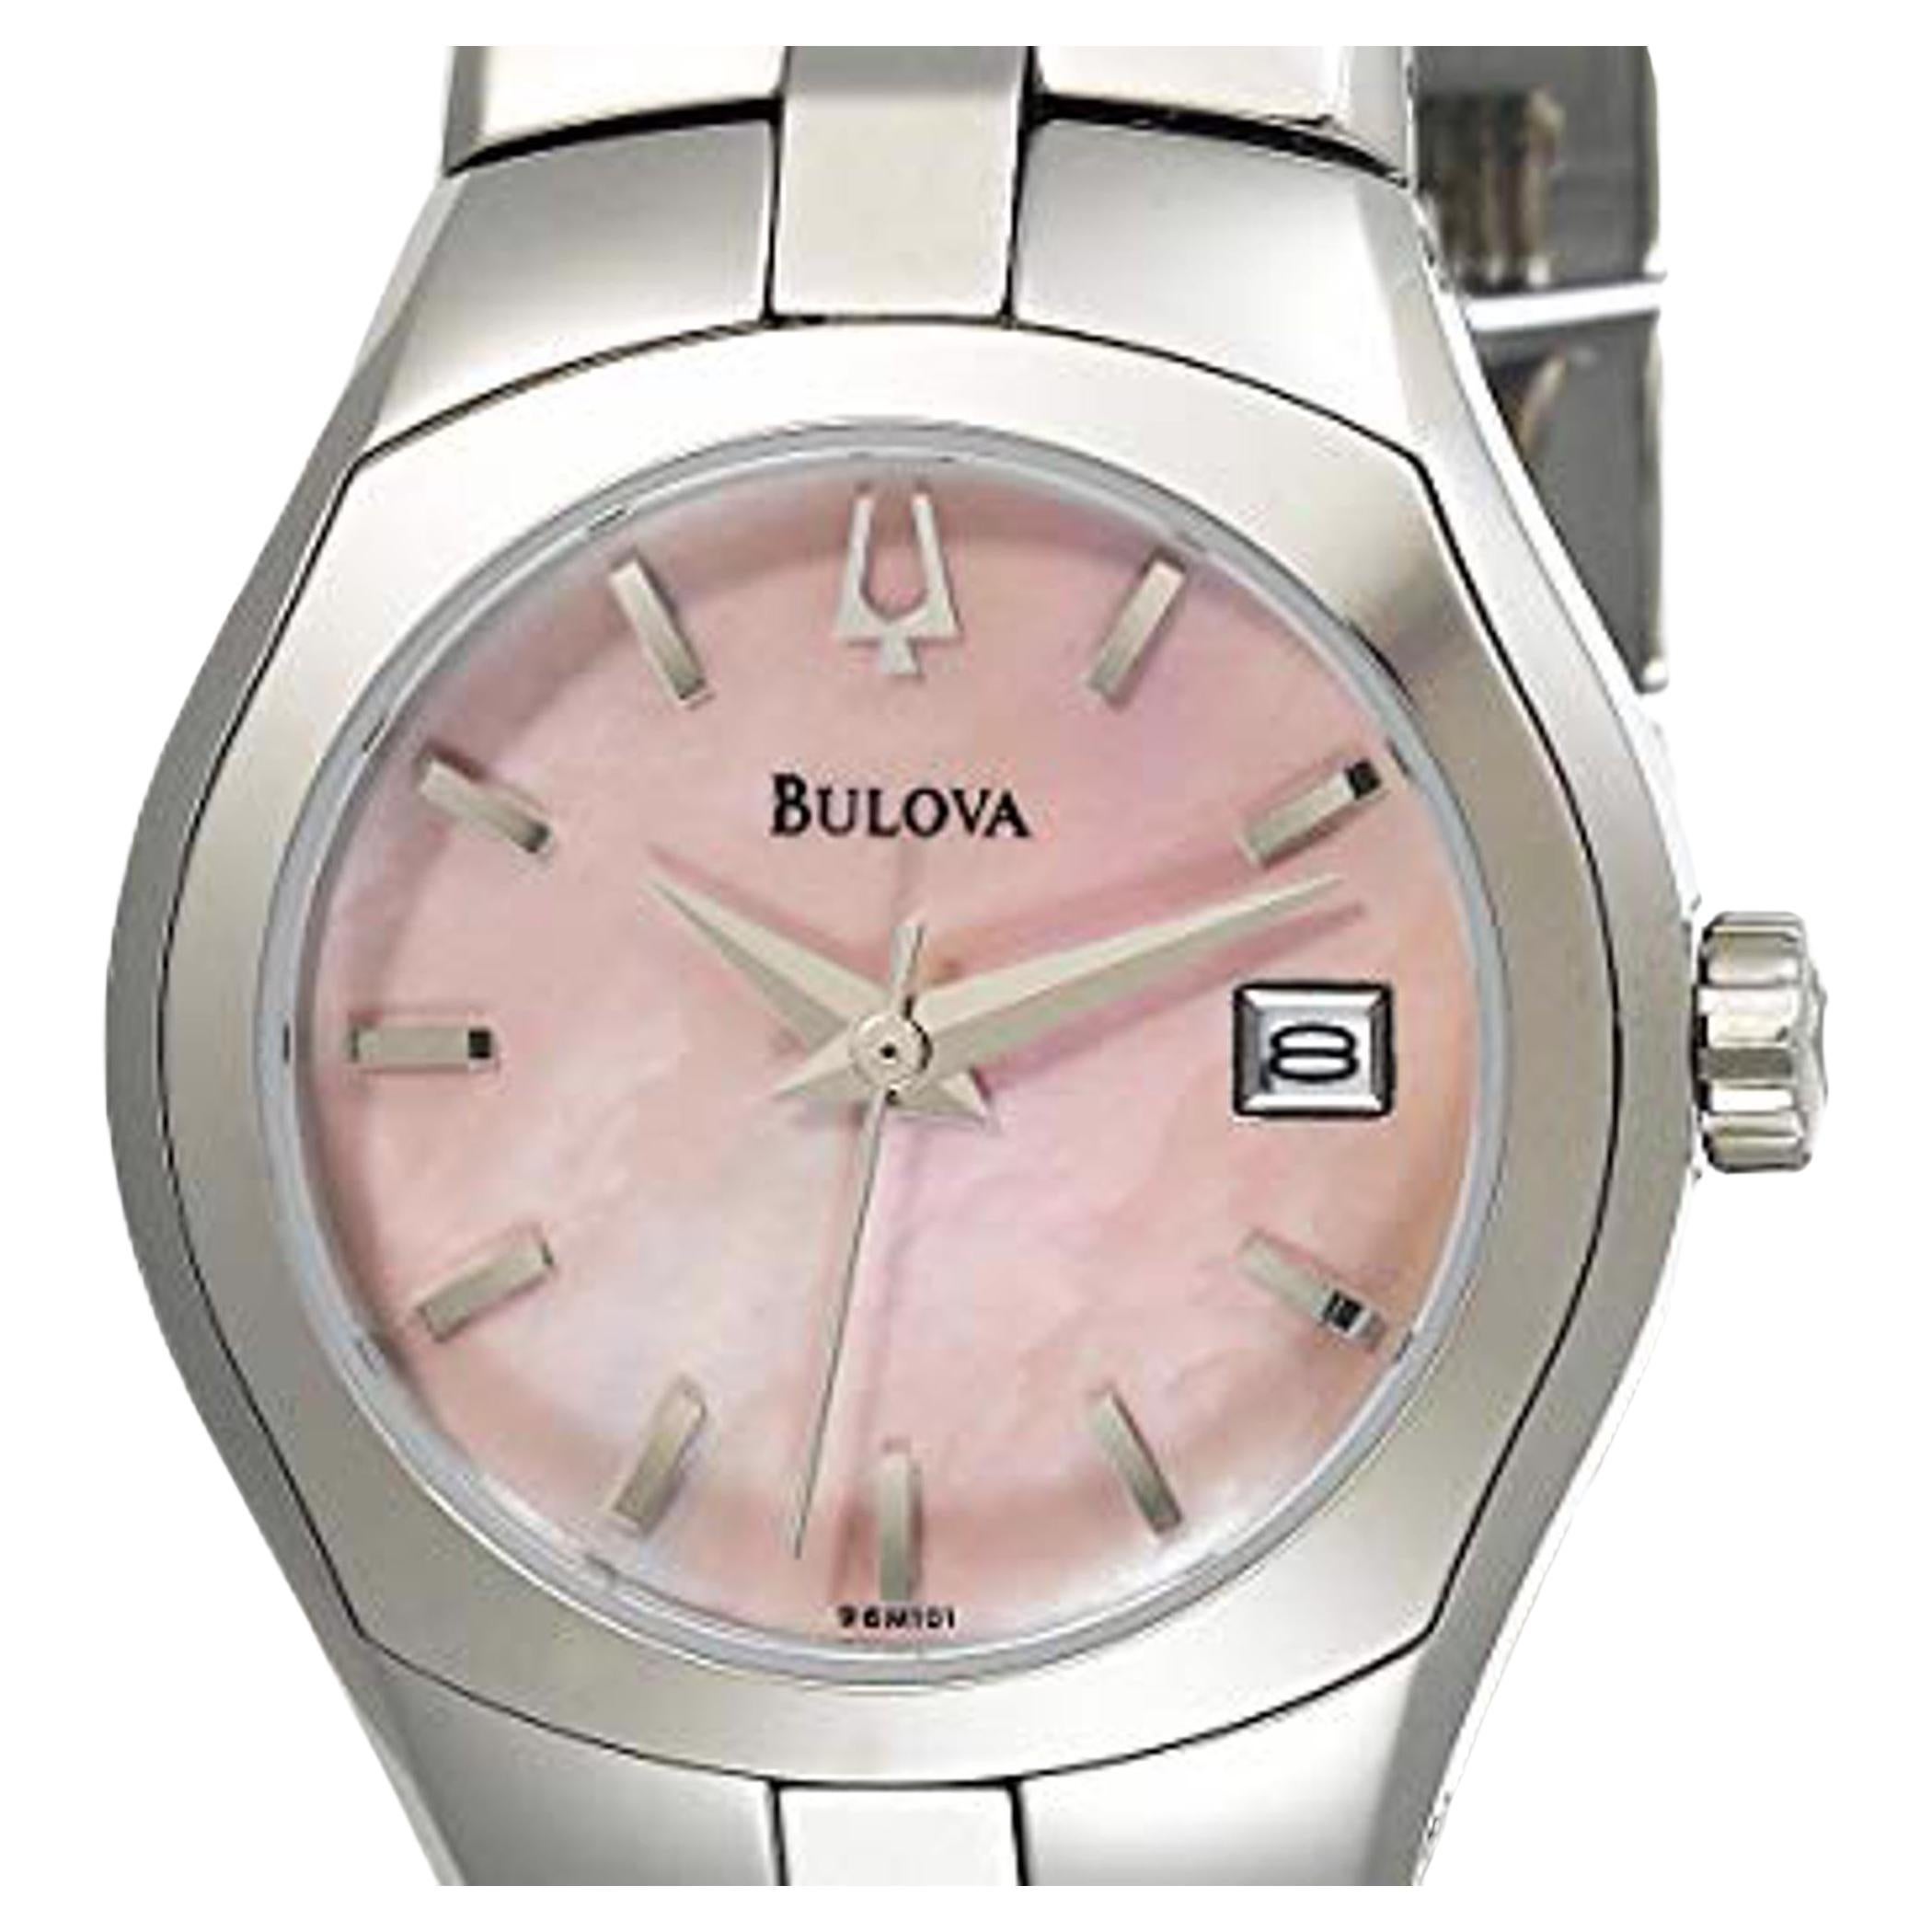 Bulova Stainless Steel Pink MOP Dial Ladies Quartz Watch 96M101